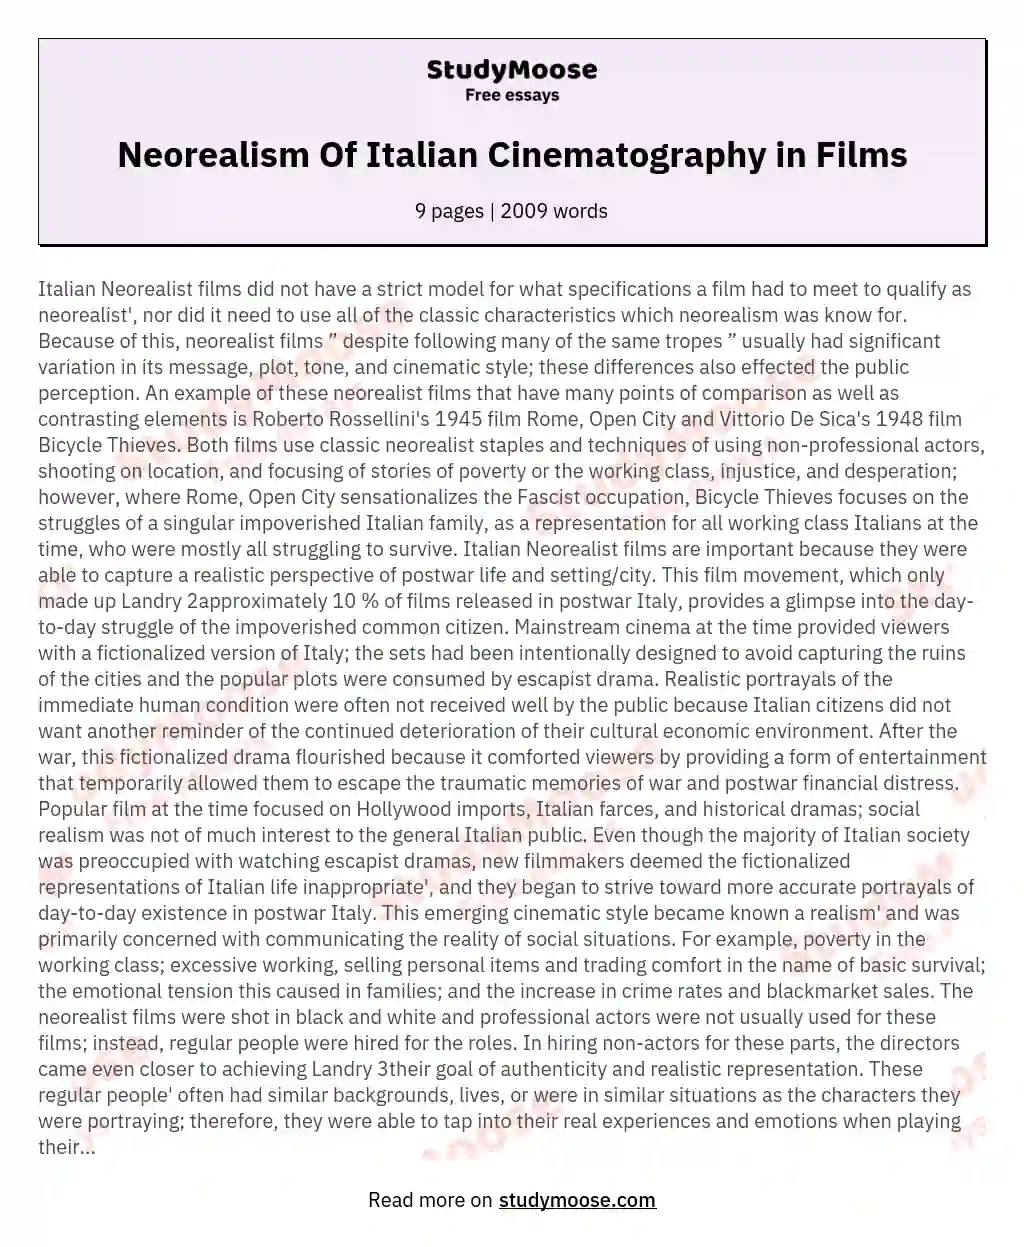 Neorealism Of Italian Cinematography in Films essay